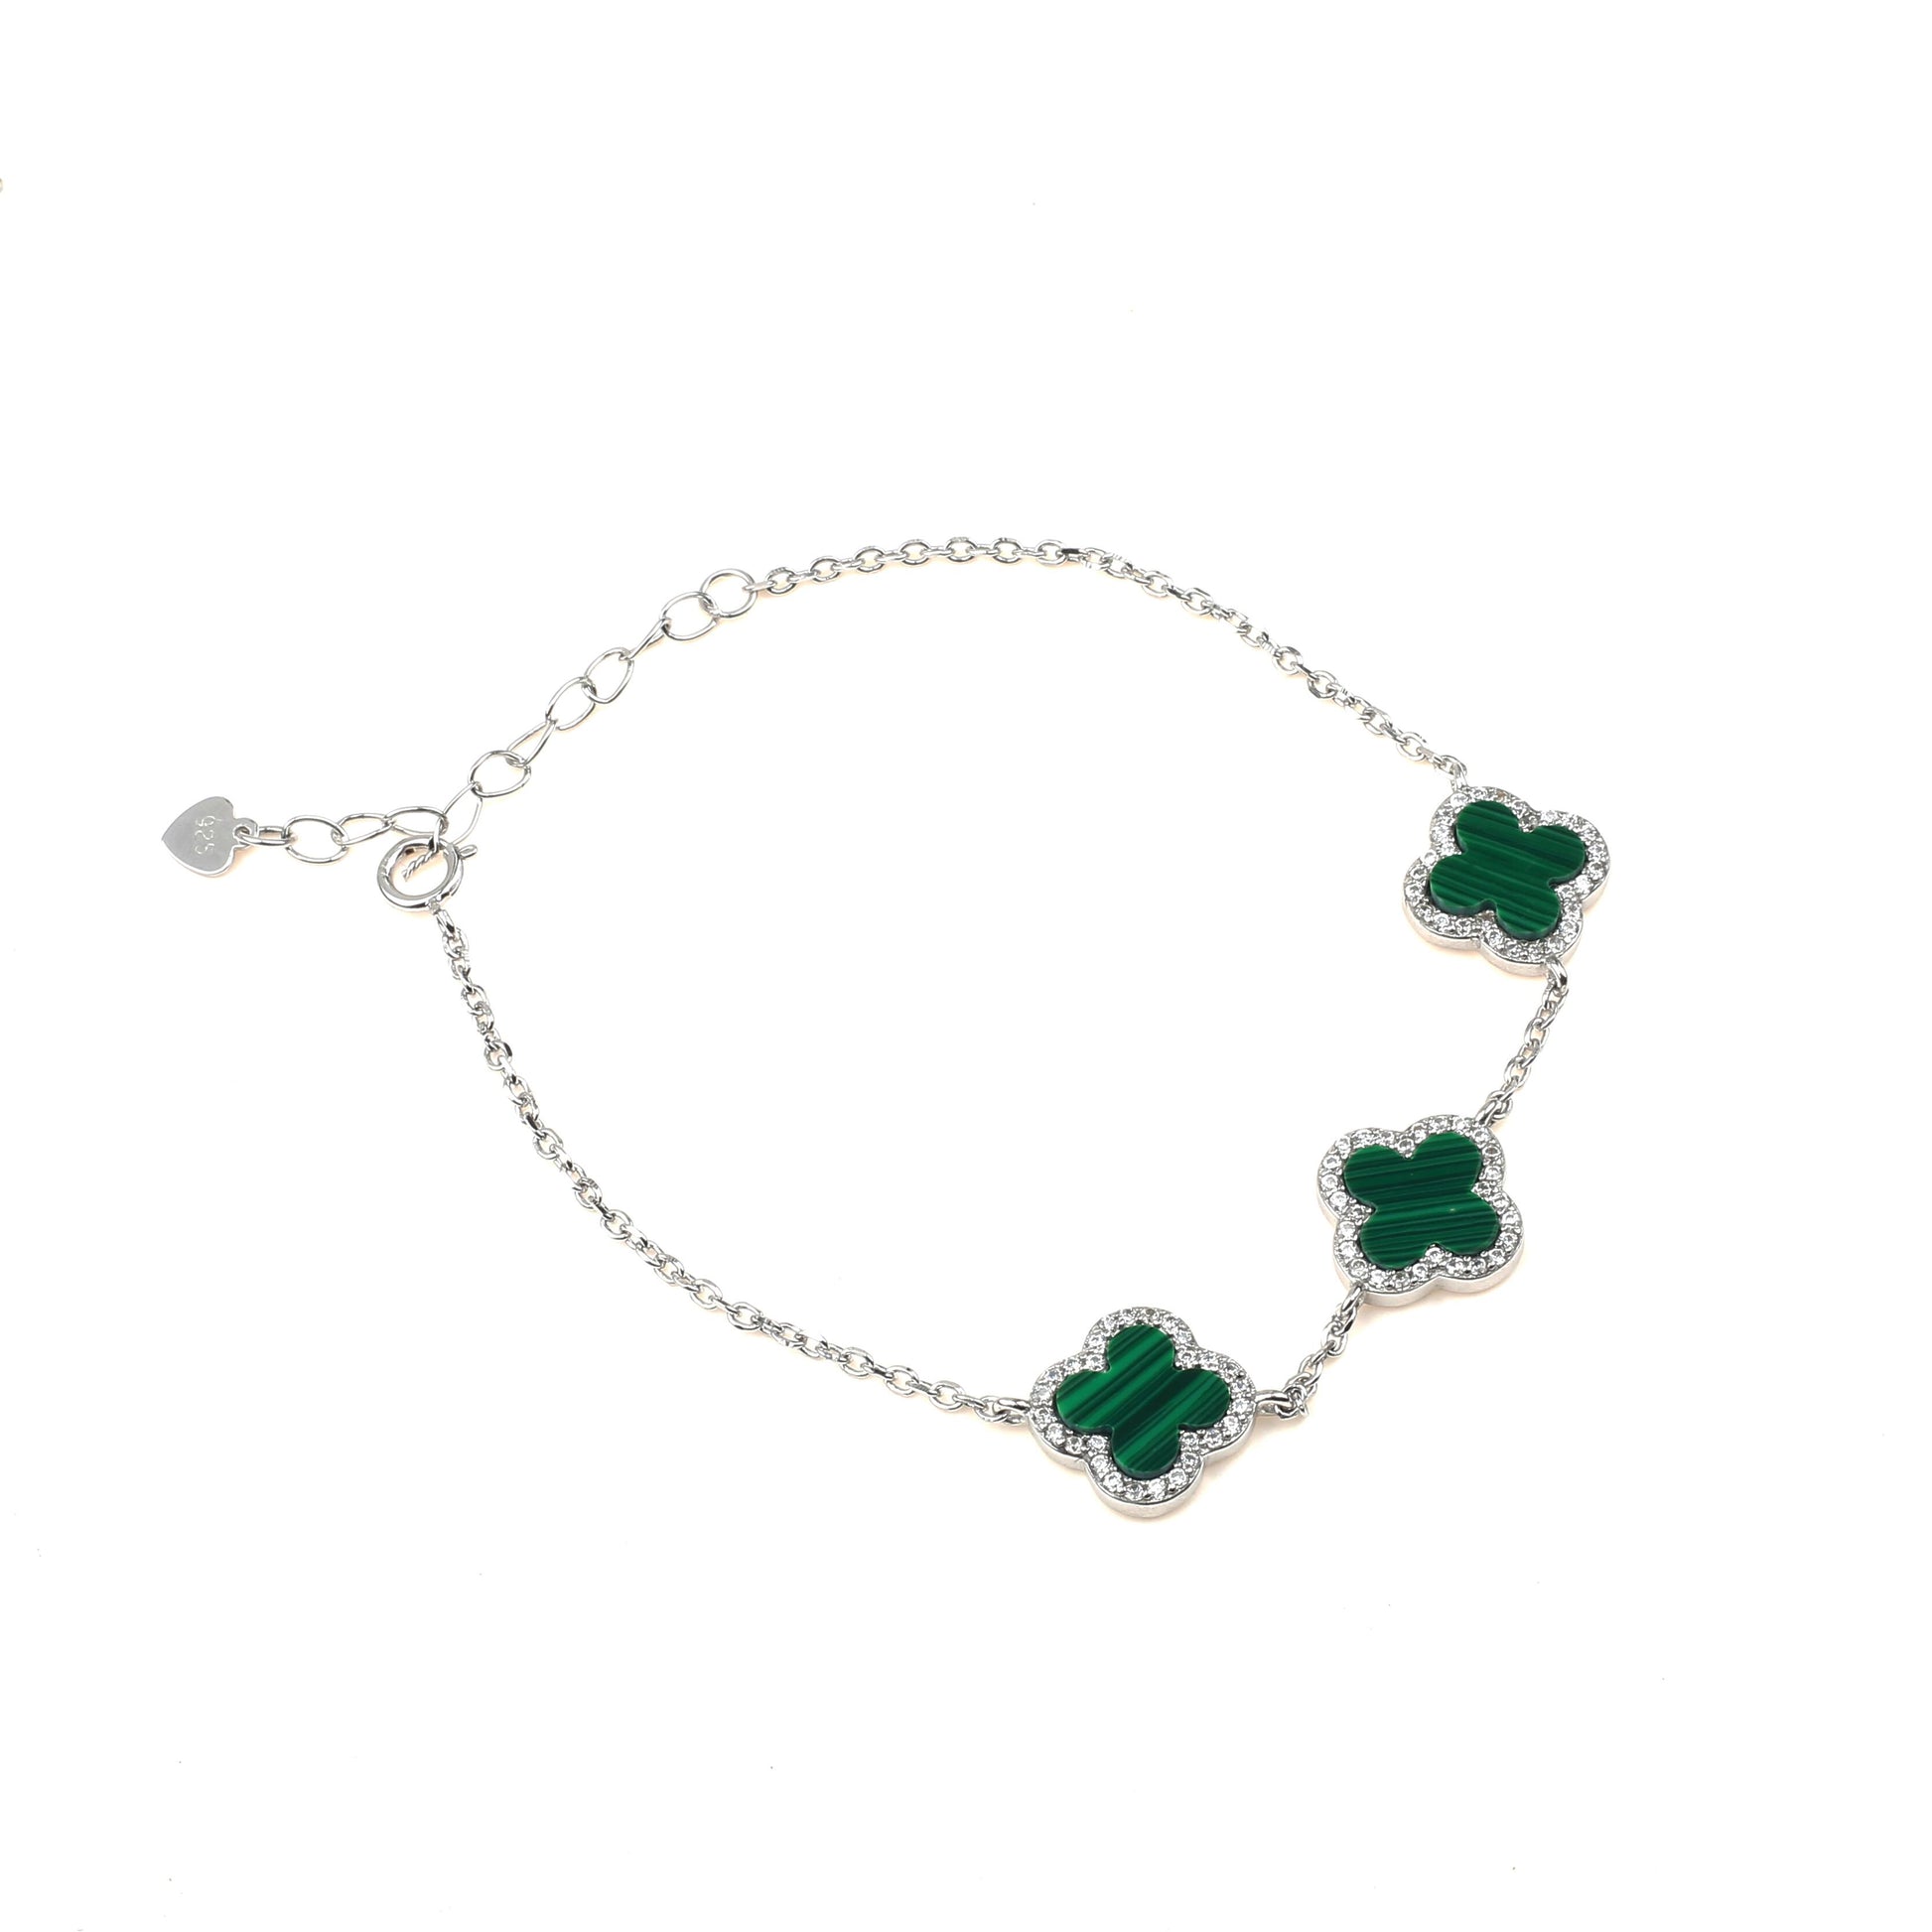 Green malachite flowers white studded cubic zirconia AAA+ 925 sterling silver link bracelet for women